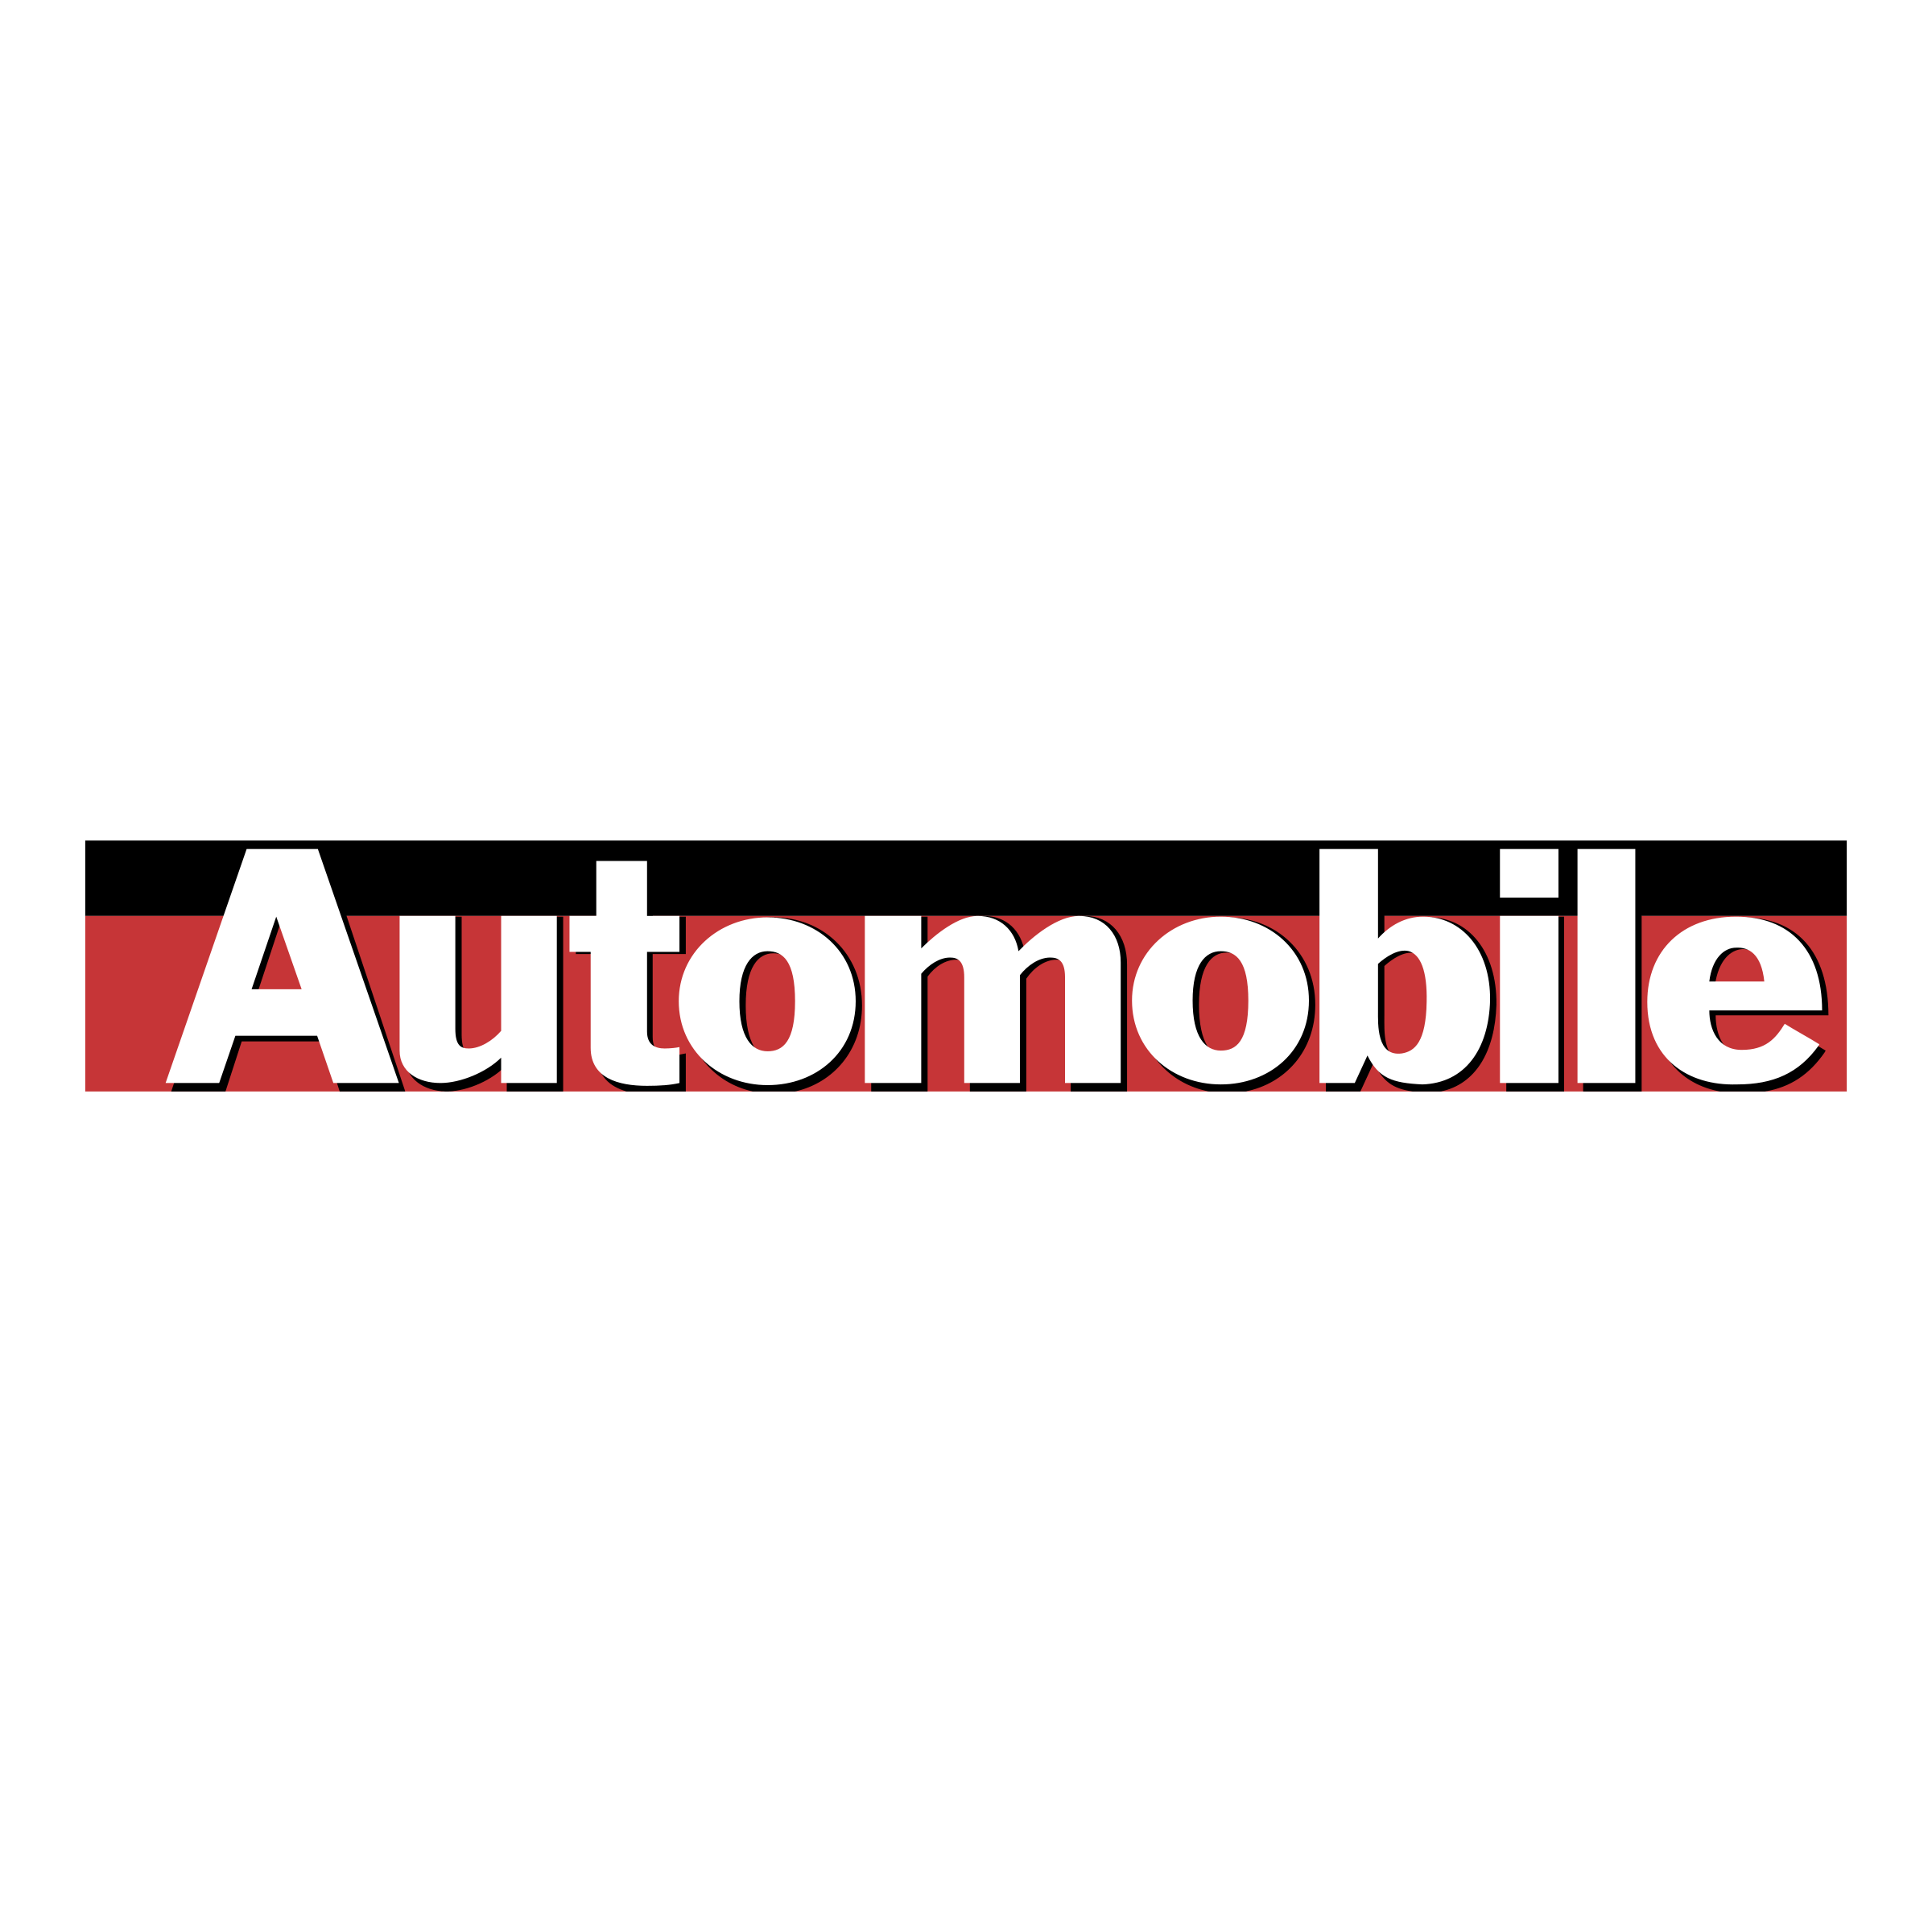 Automoblie Logo - Automobile Logo PNG Transparent & SVG Vector - Freebie Supply